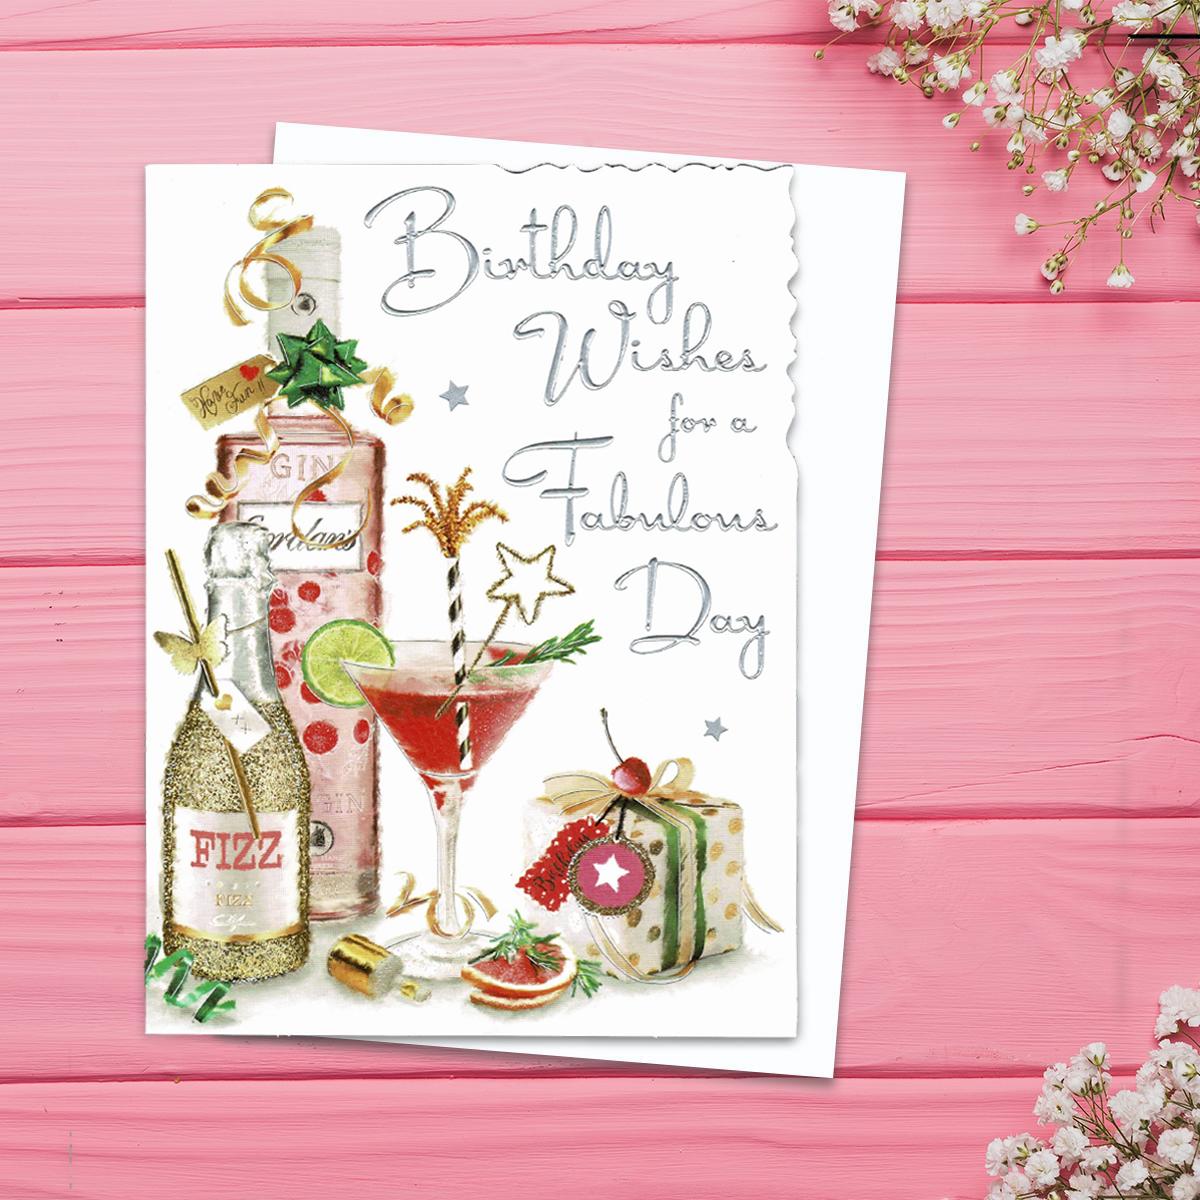 Gin Themed Birthday Card Alongside Its White Envelope